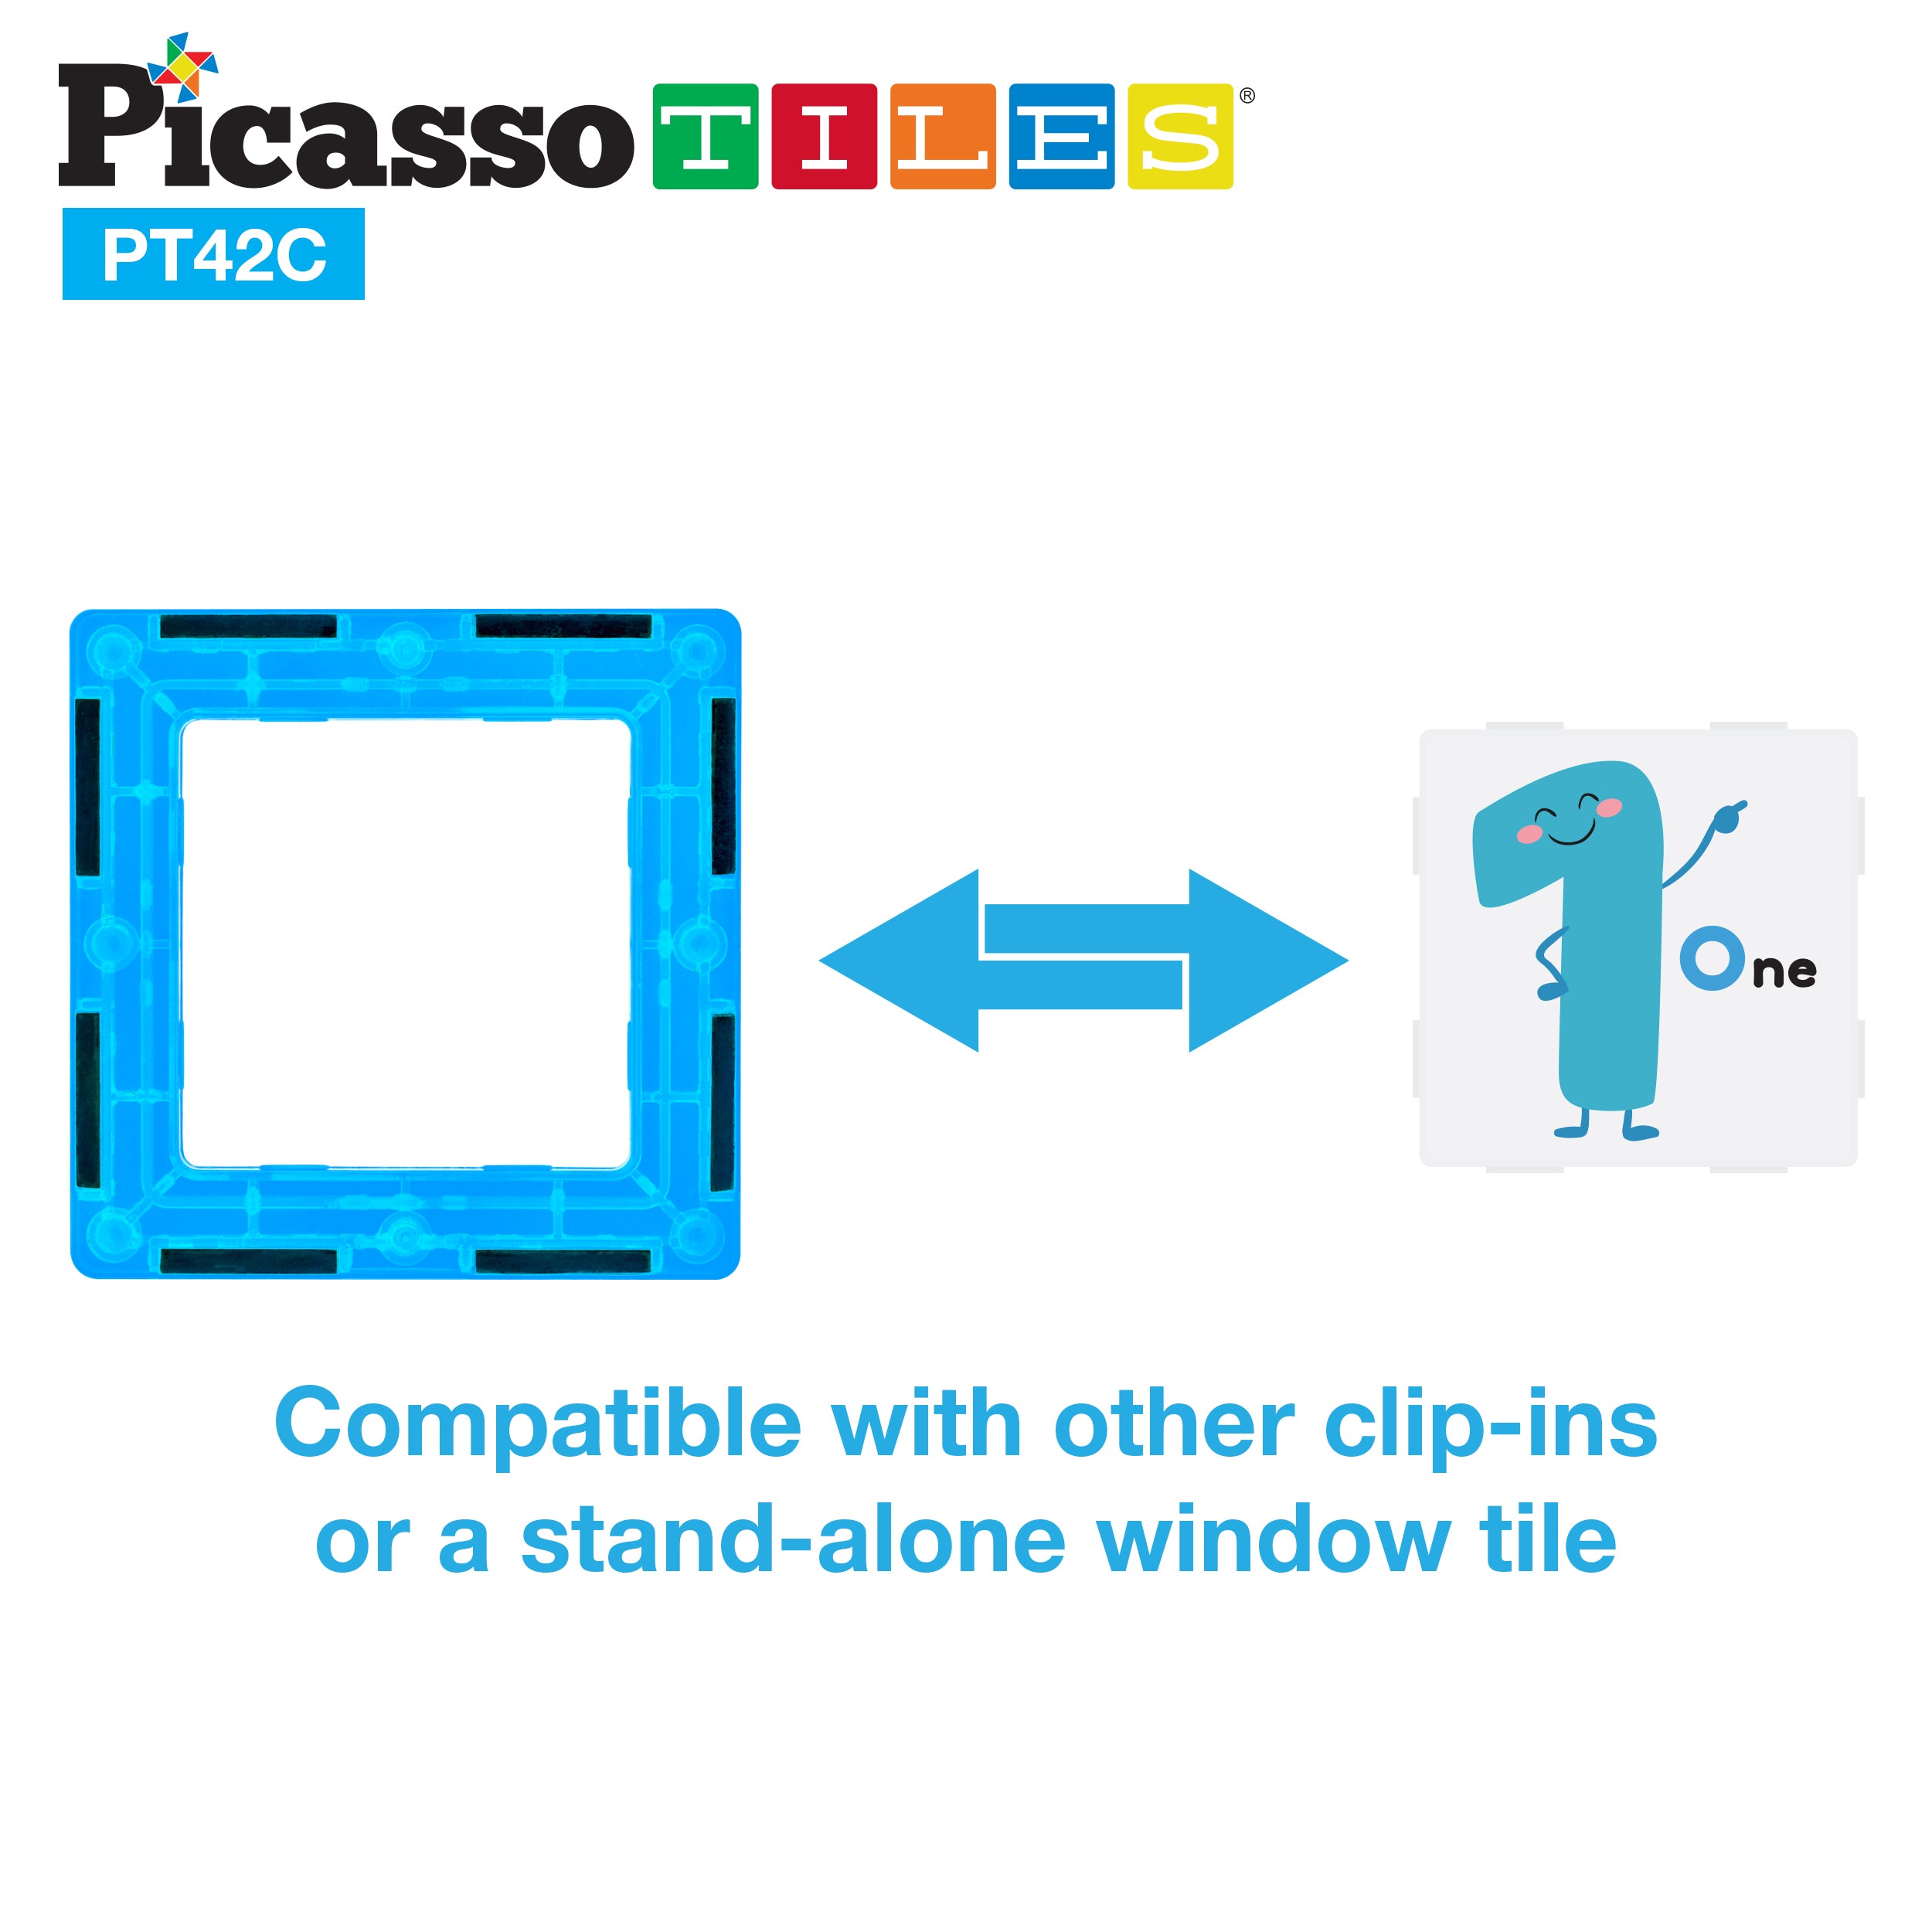 PicassoTiles Magnet Tile Toy Click-In Graphic Art Piece Set - 42 Pieces